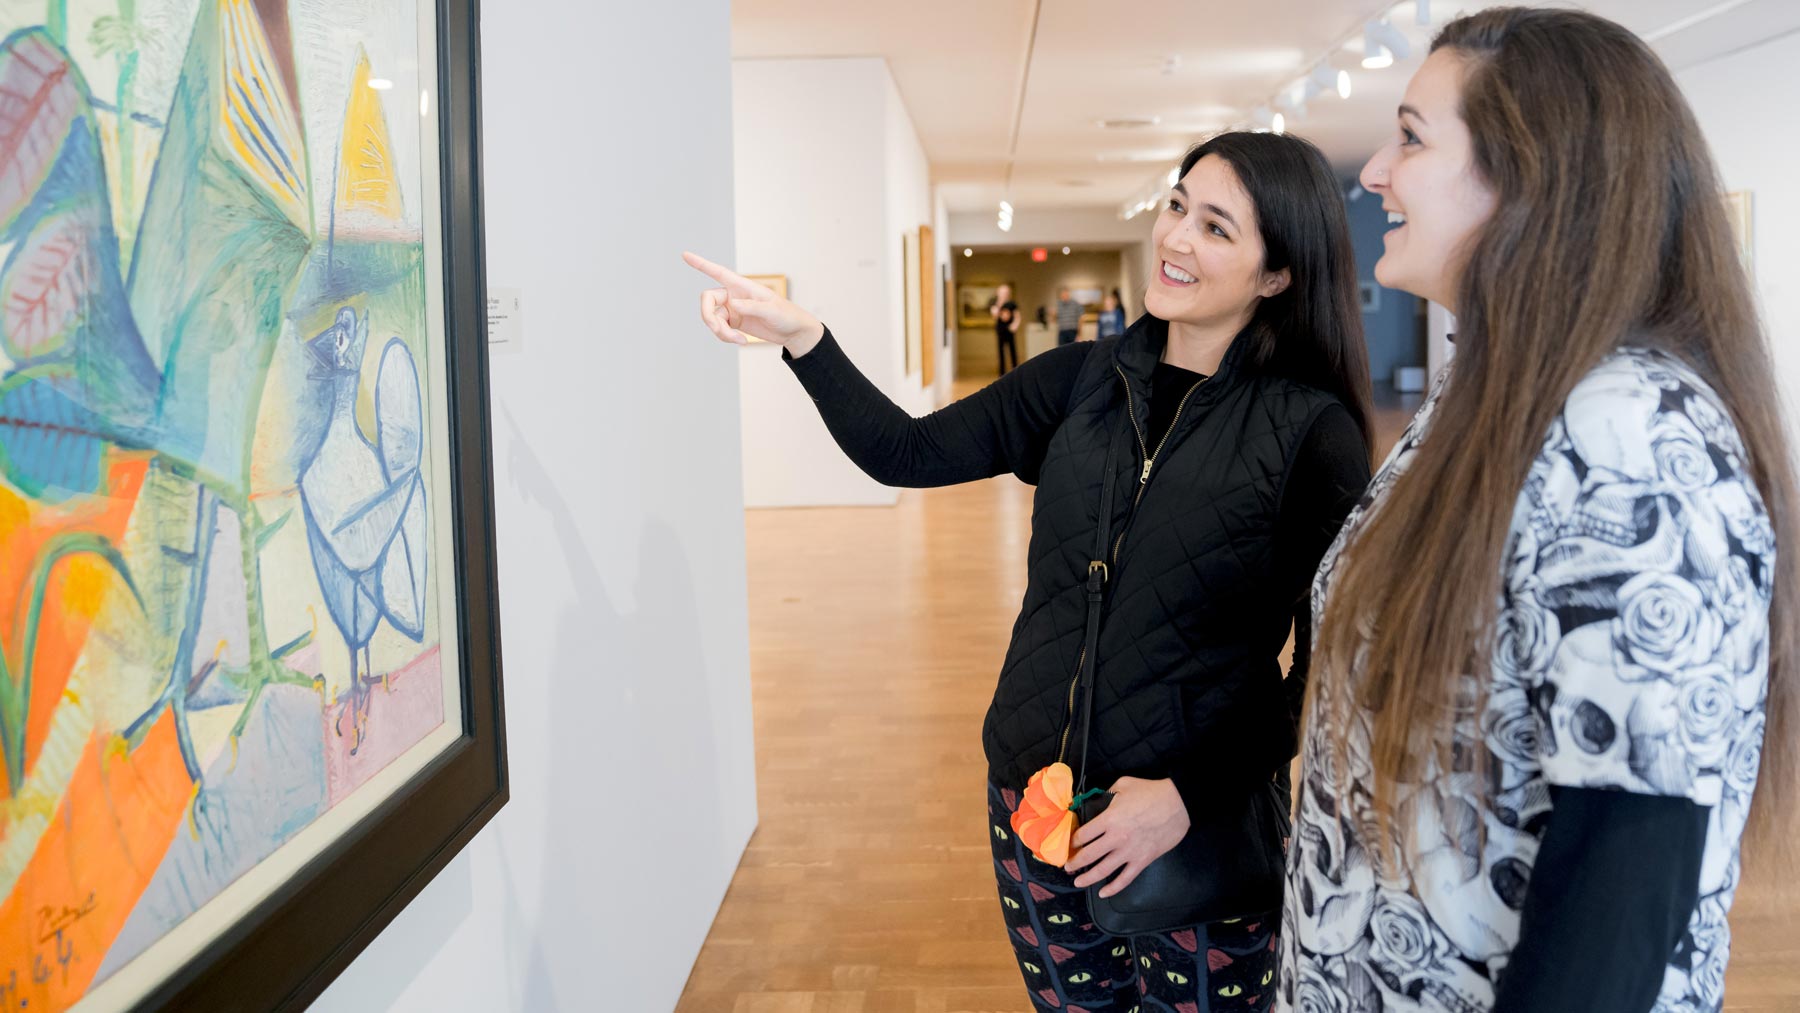 Two women admiring a work of art